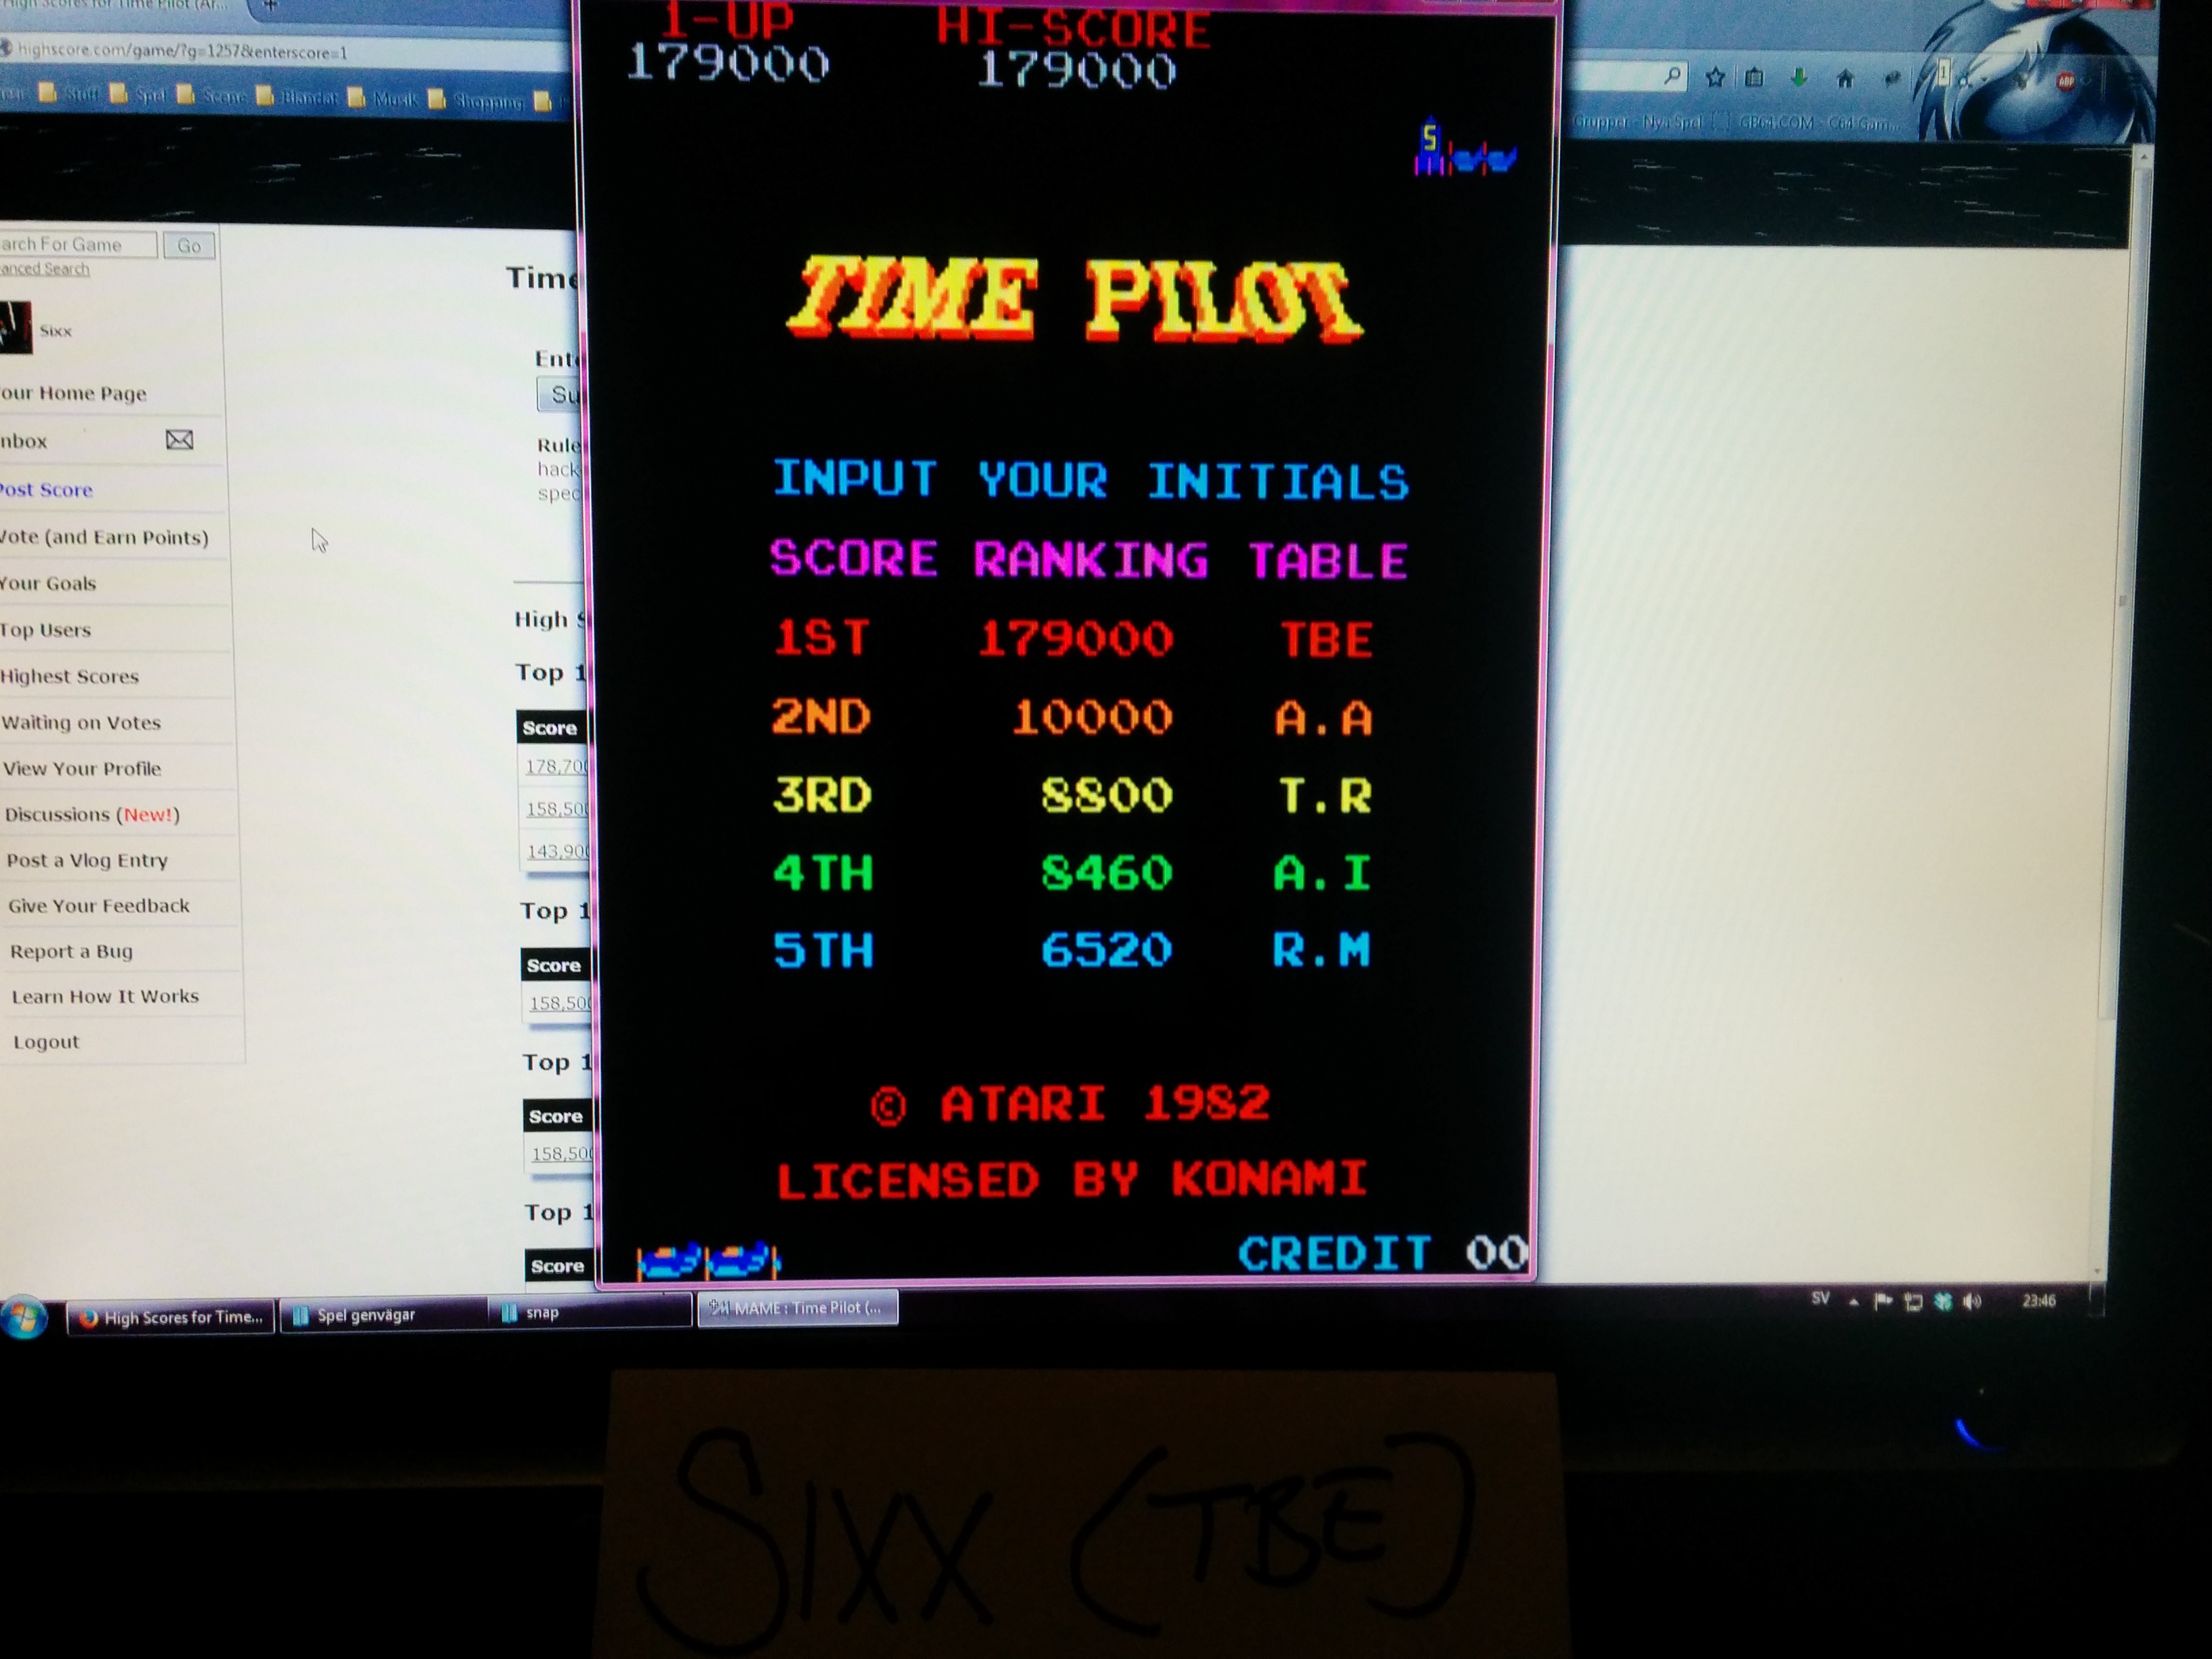 Sixx: Time Pilot (Arcade Emulated / M.A.M.E.) 179,000 points on 2014-06-05 16:26:38